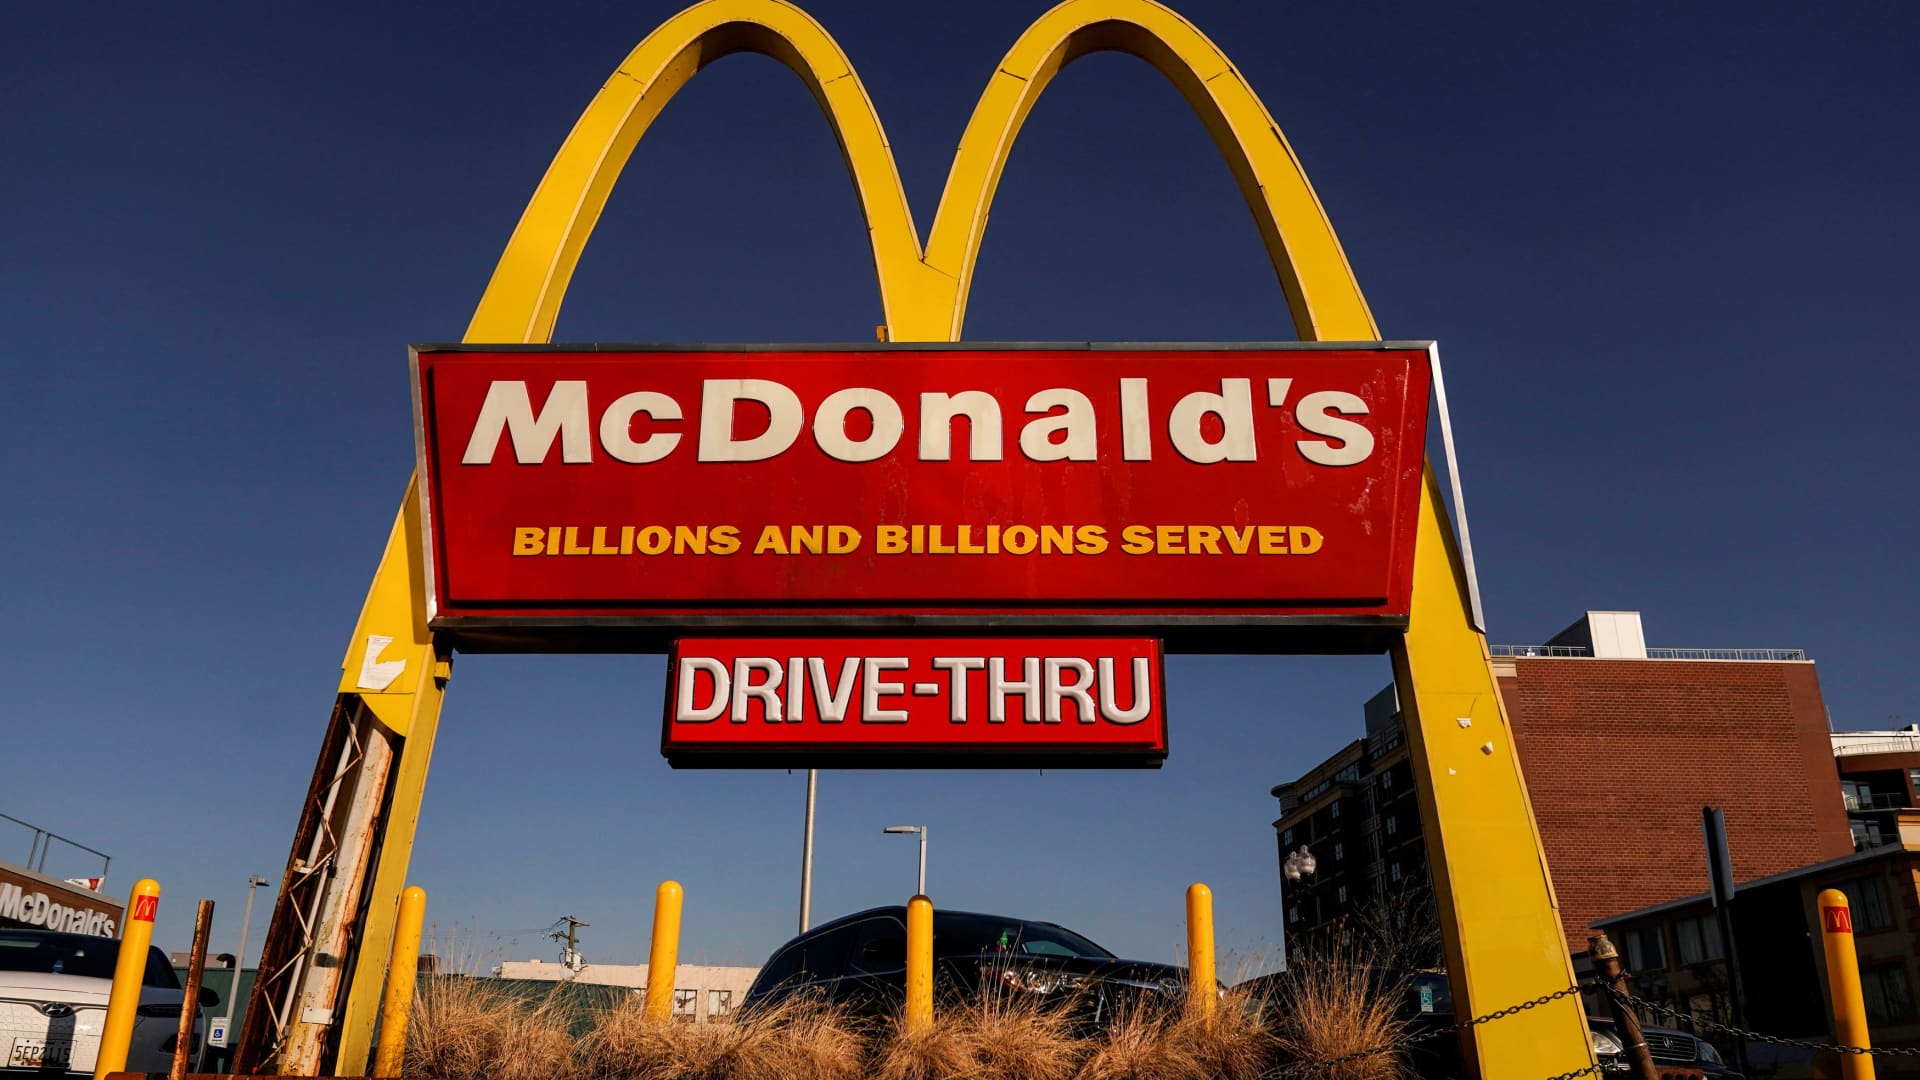 Top analysts say buy stocks like McDonald’s & Tesla